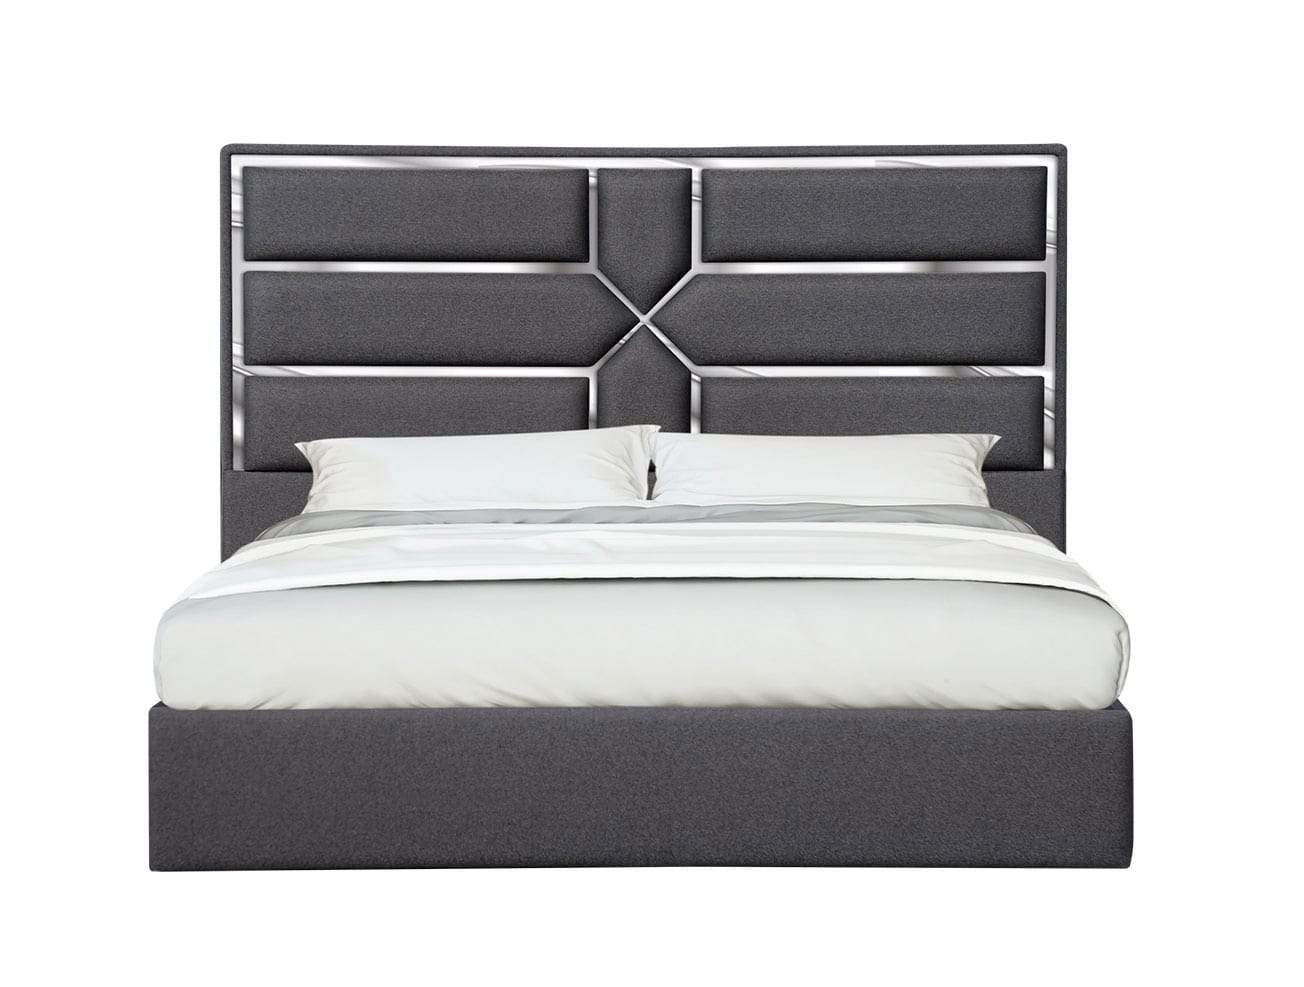 J and M Furniture Bed Da Vinci Bed in Charcoal